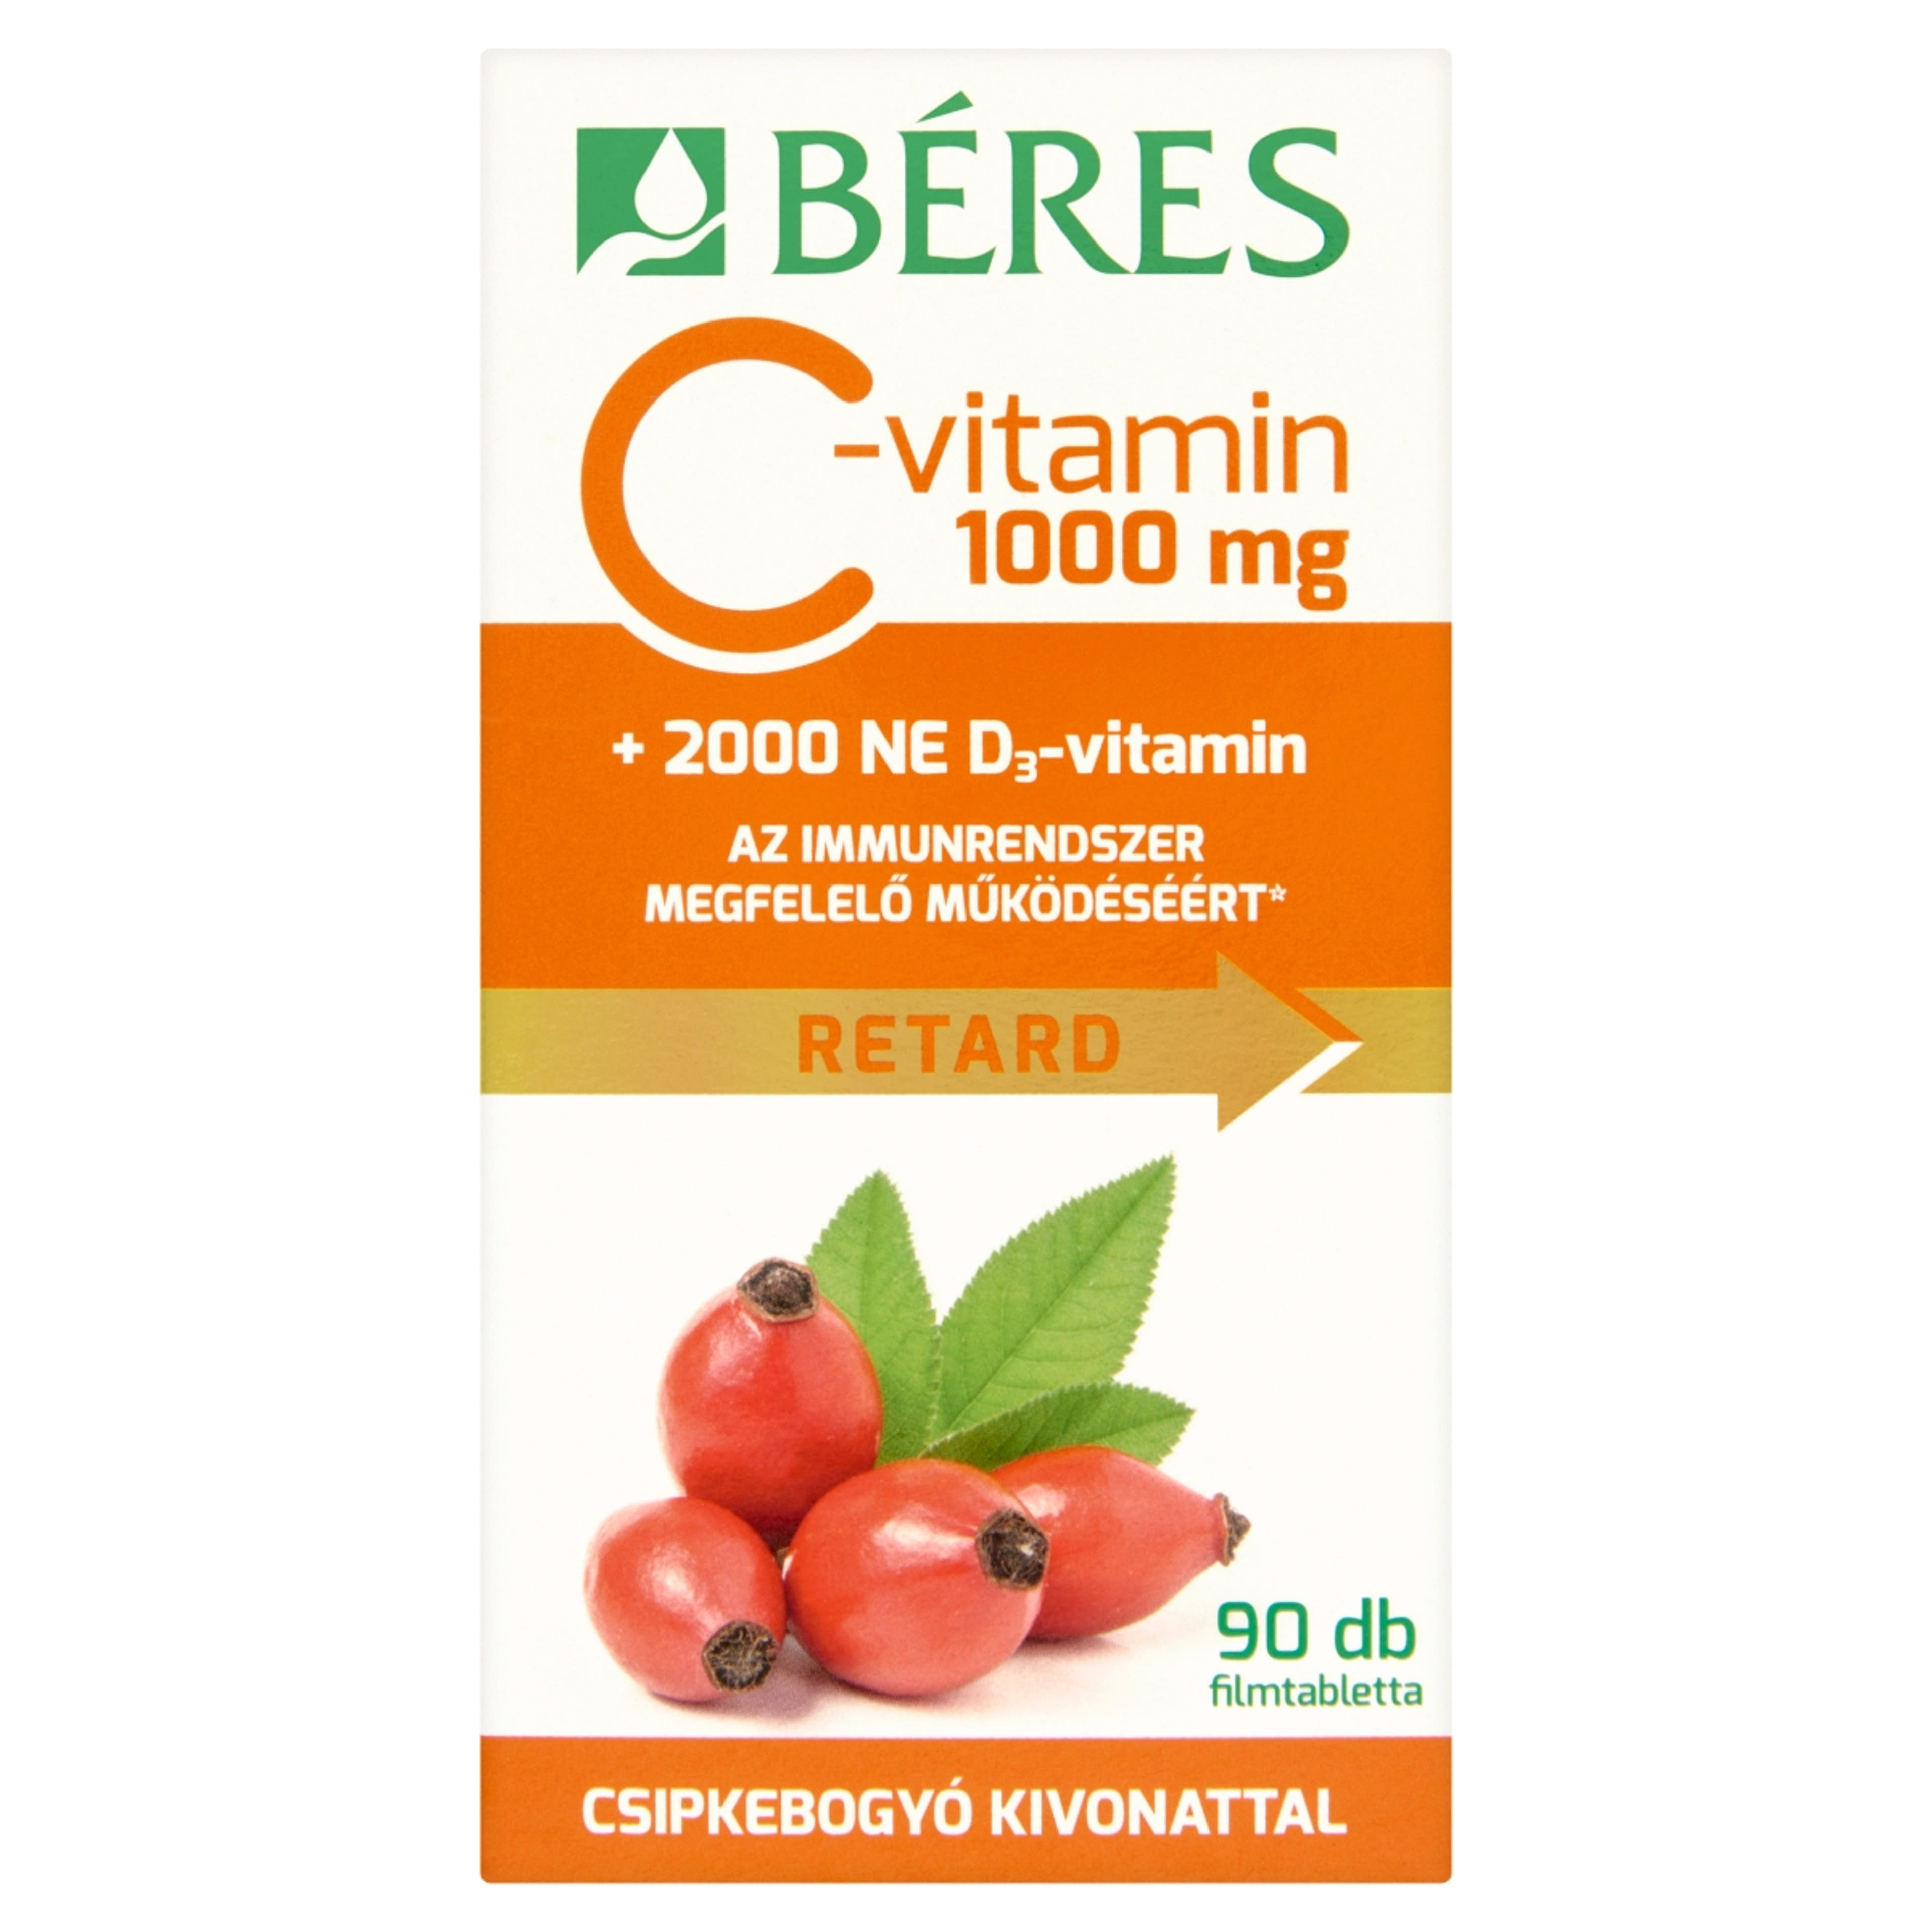 Béres C-vitamin 1000mg Retard filmtabletta csipkebogyó+ 2000 NE D3-vitamin - 90 db-1